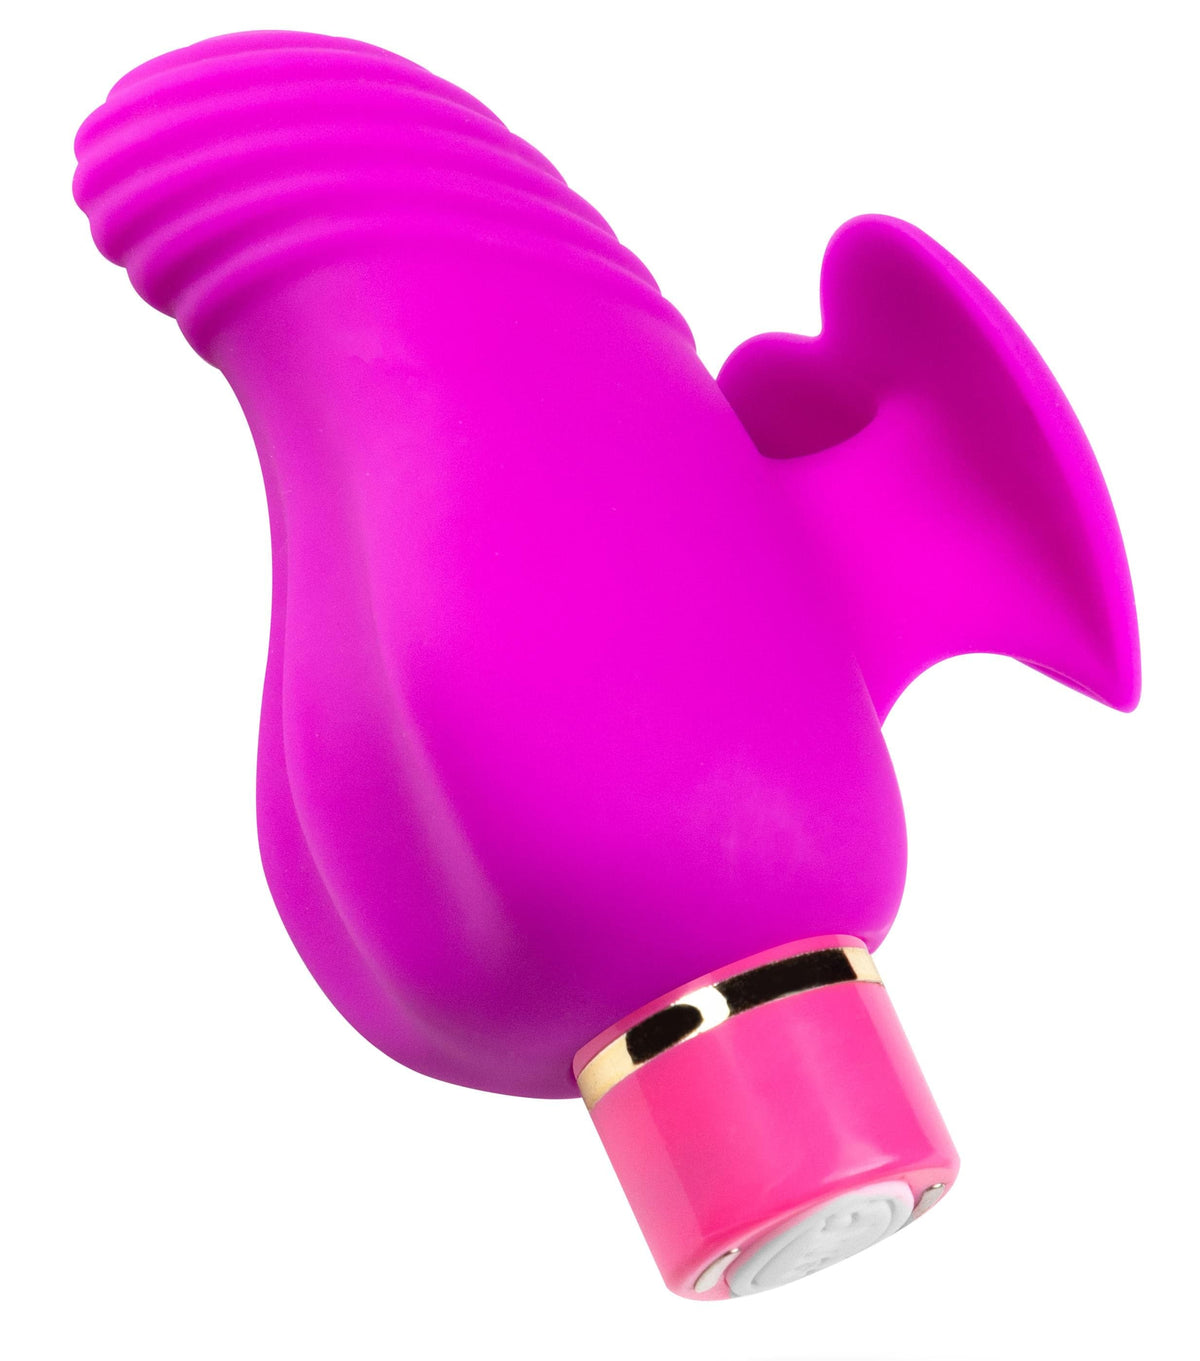 aria erotic af plum, best small vibrator, best discreet vibrator